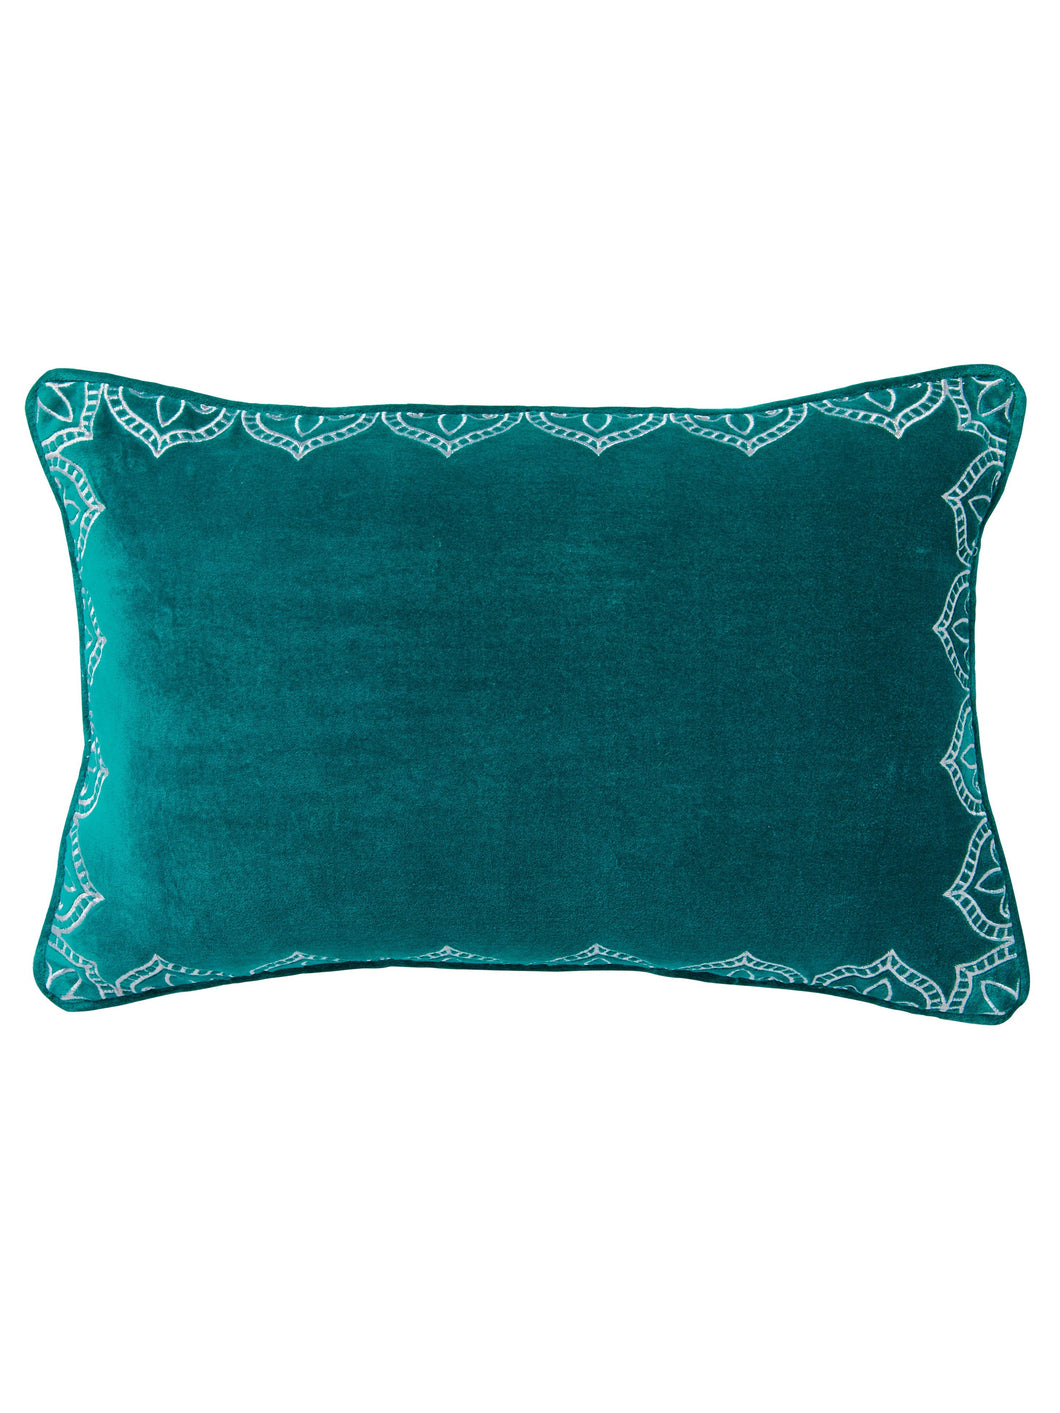 Embroidered Sea Green Velvet Cushion